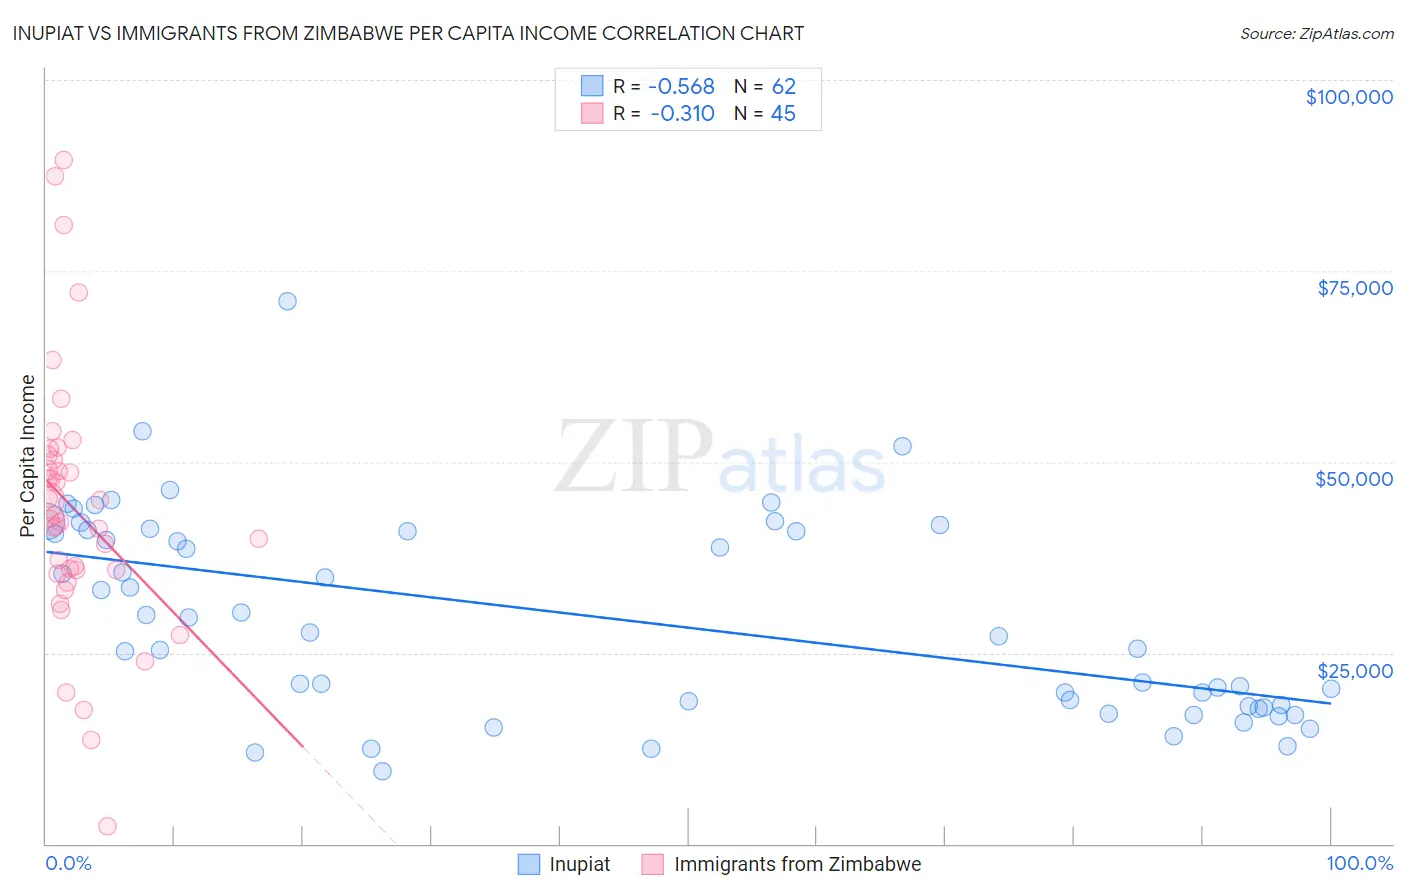 Inupiat vs Immigrants from Zimbabwe Per Capita Income